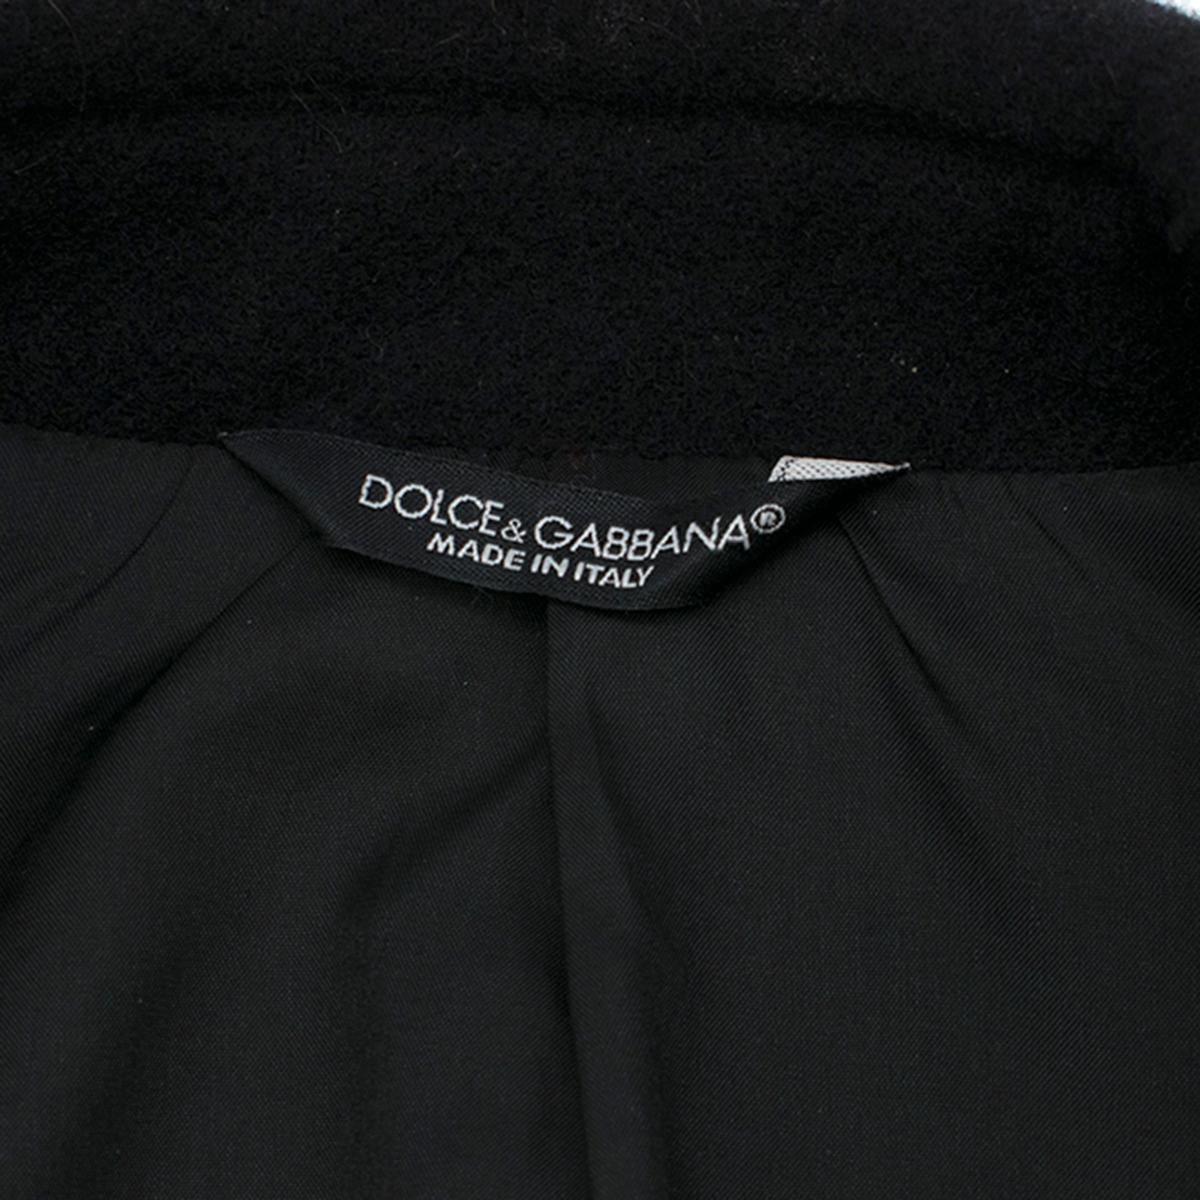 Dolce & Gabbana Men's Black Wool-blend Tailored Jacket estimated SIZE S 2